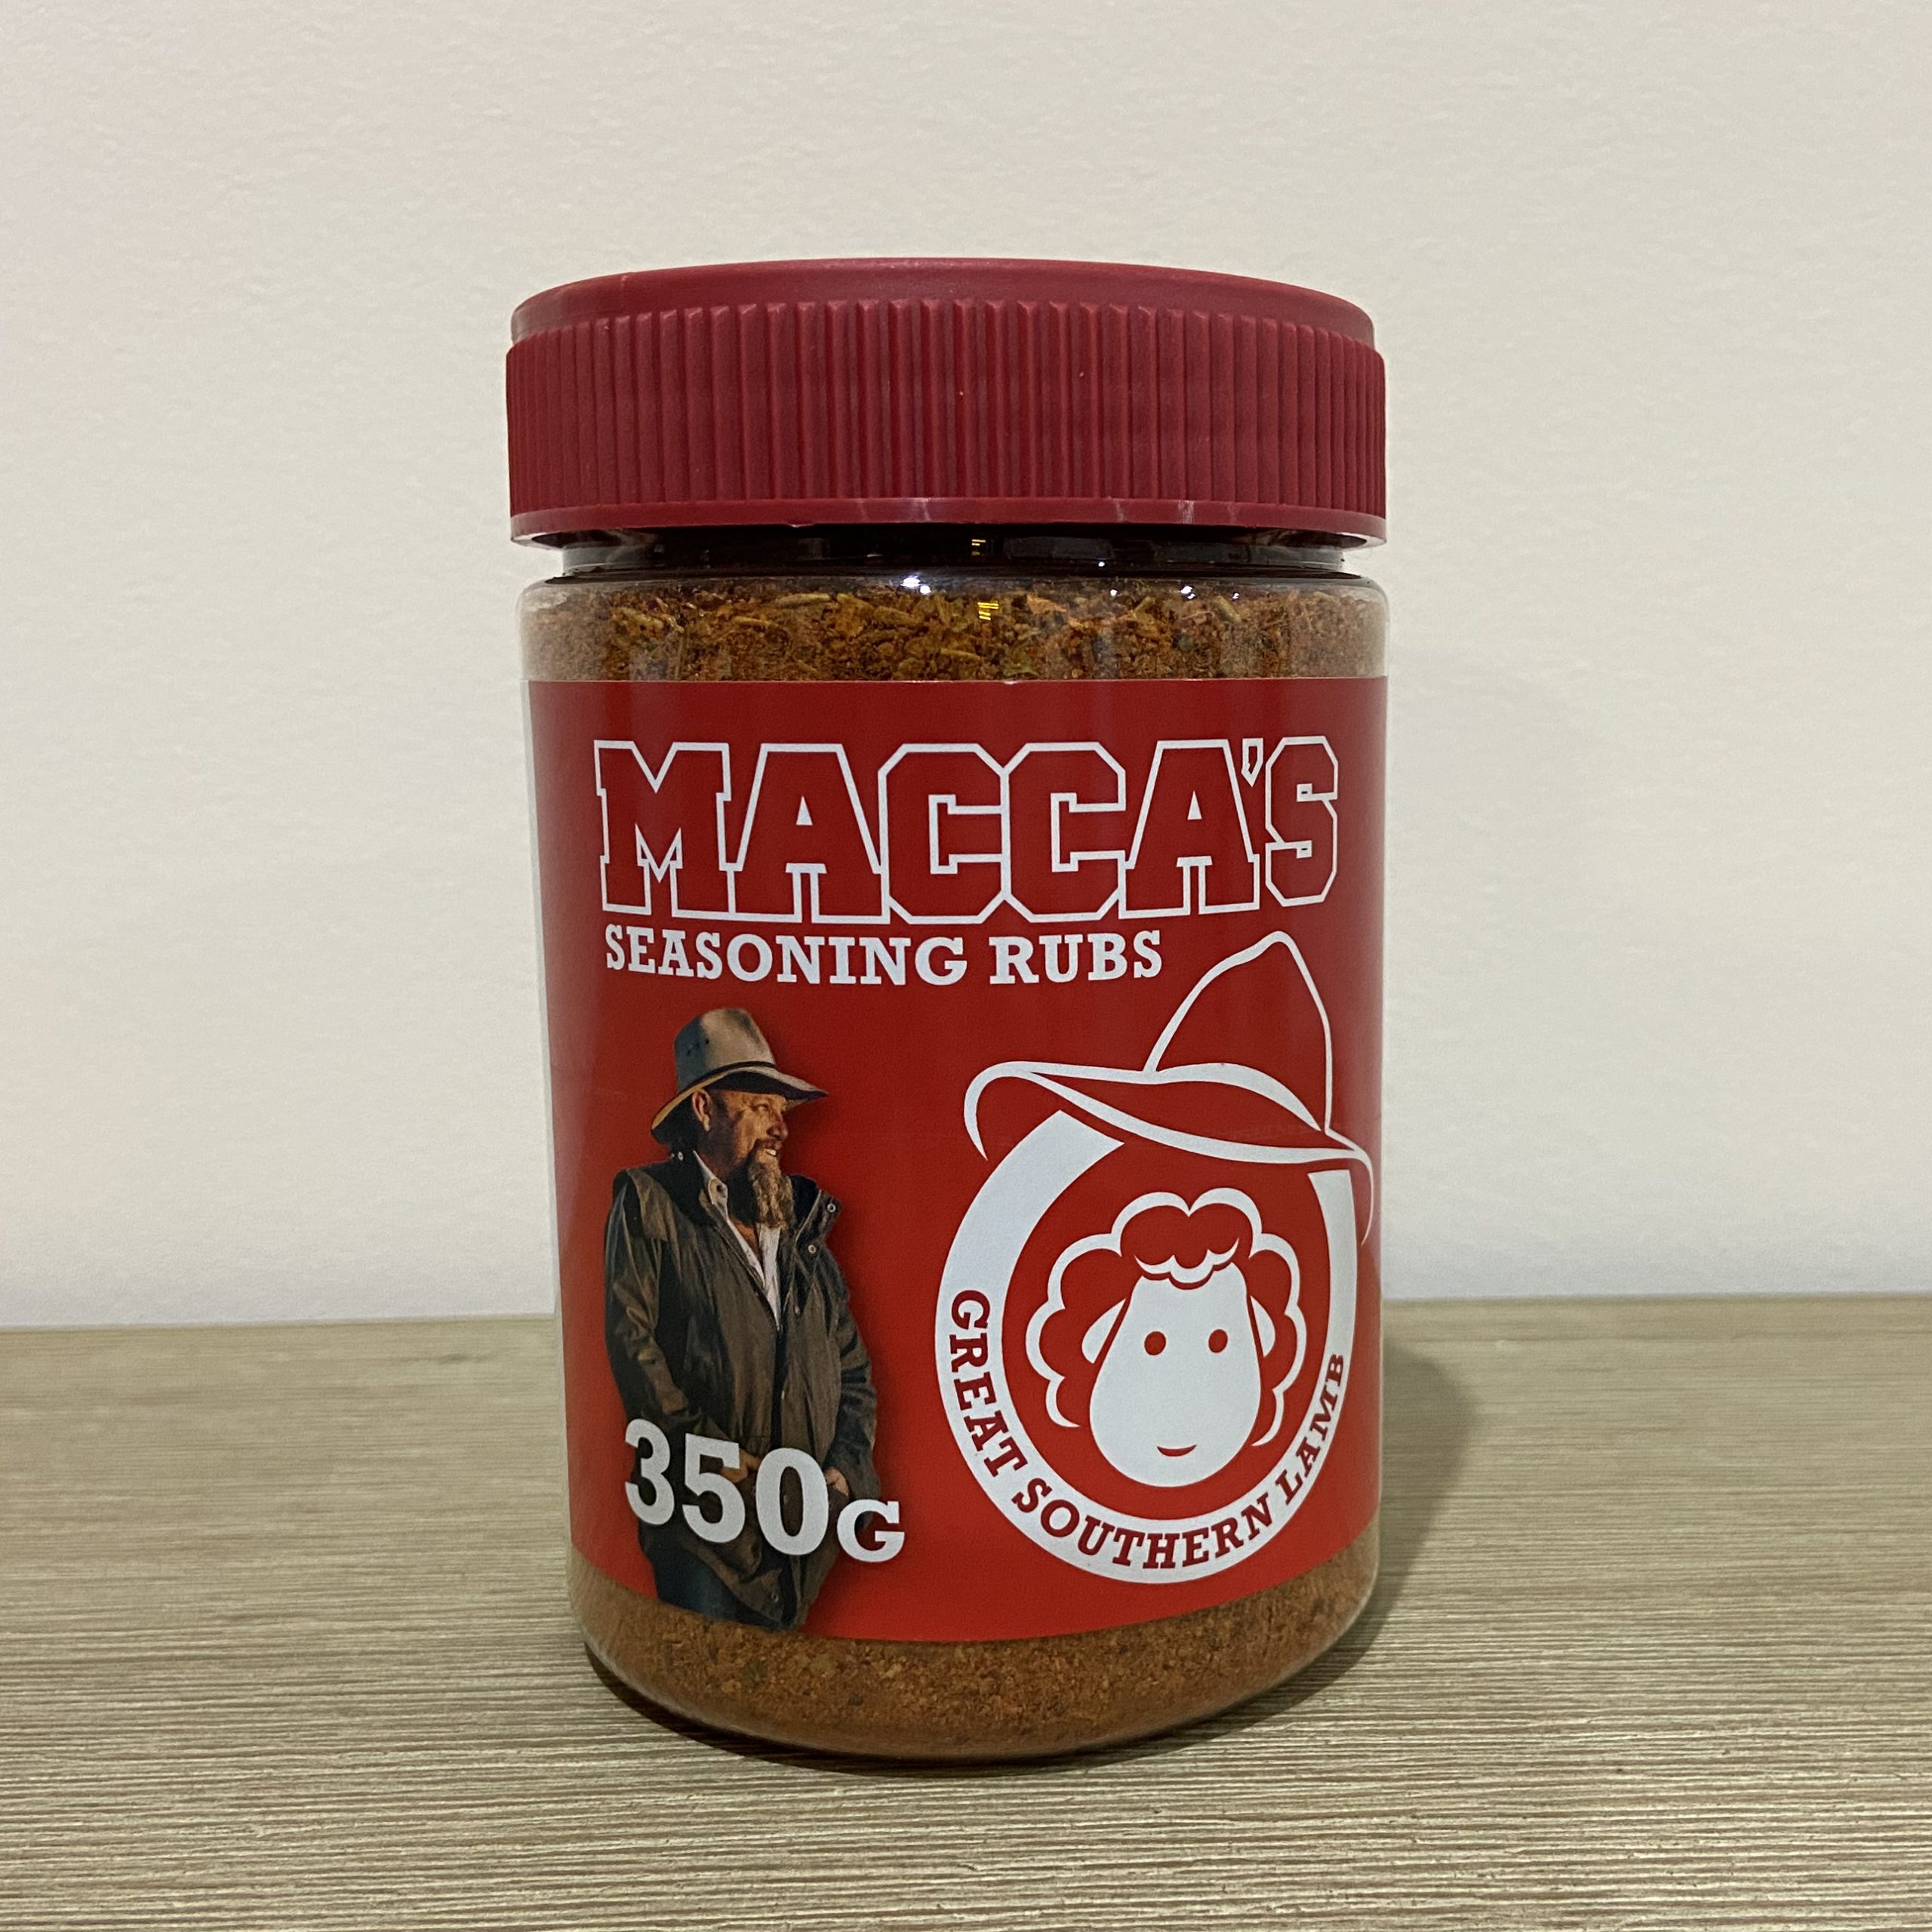 Macca’s seasoning rubs – great southern lamb 350g